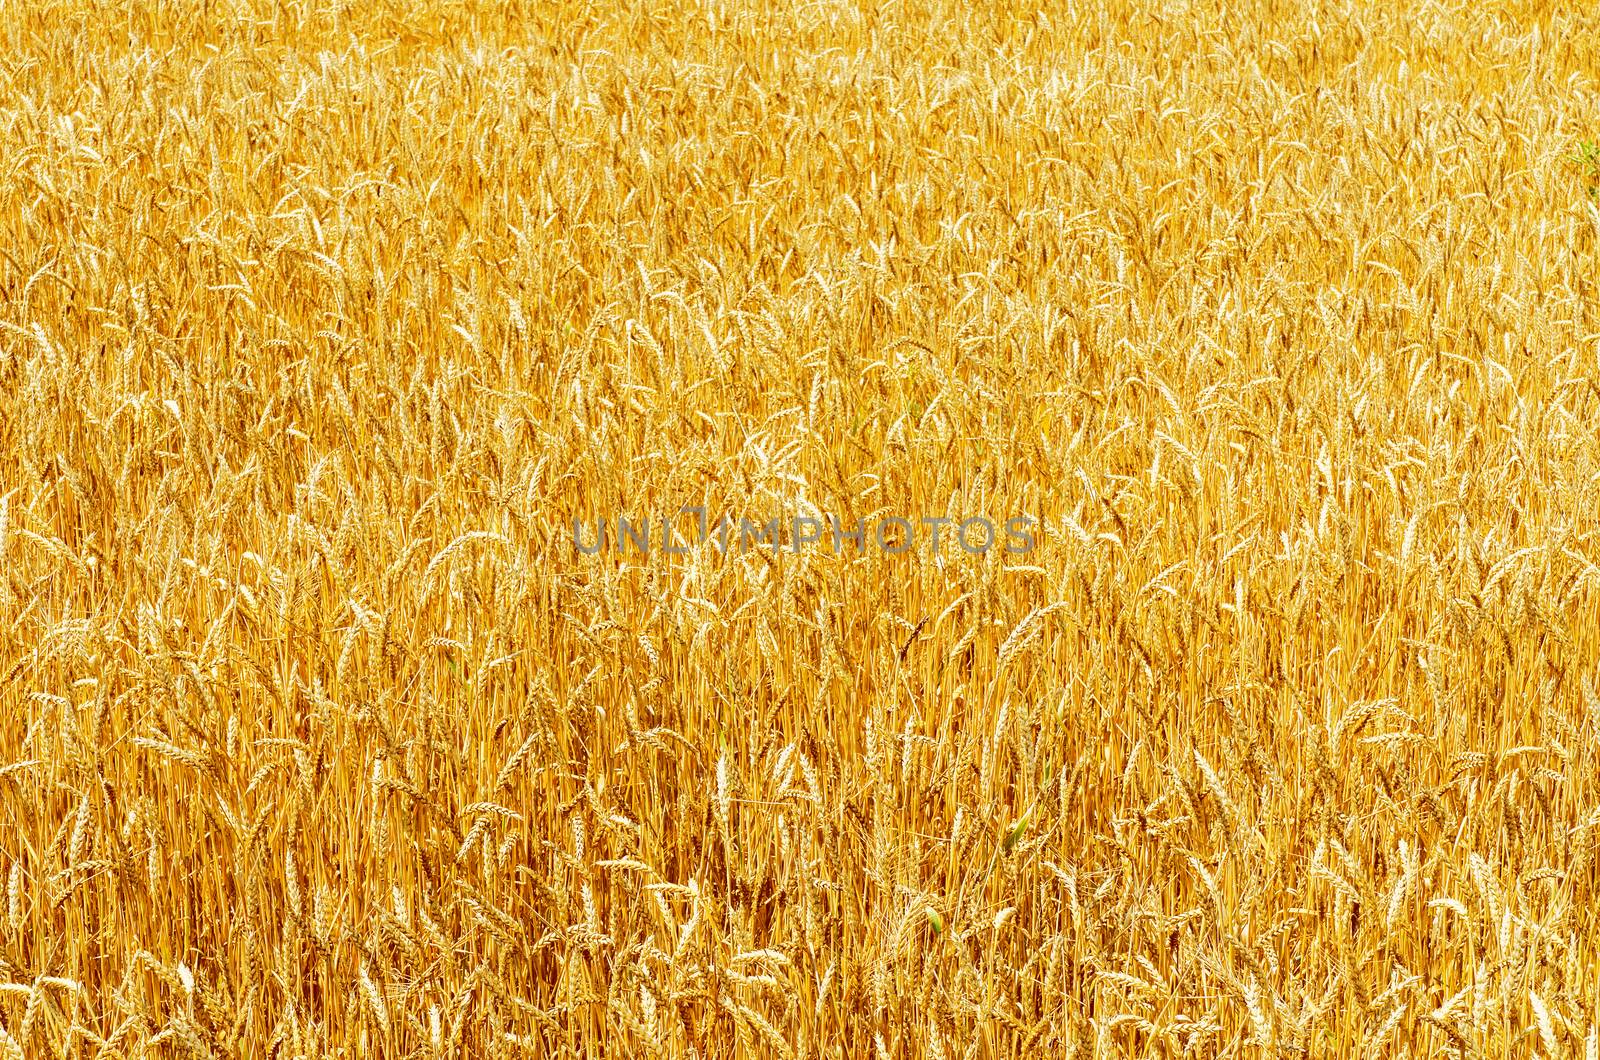 yellow ripe harvest field. soft focus